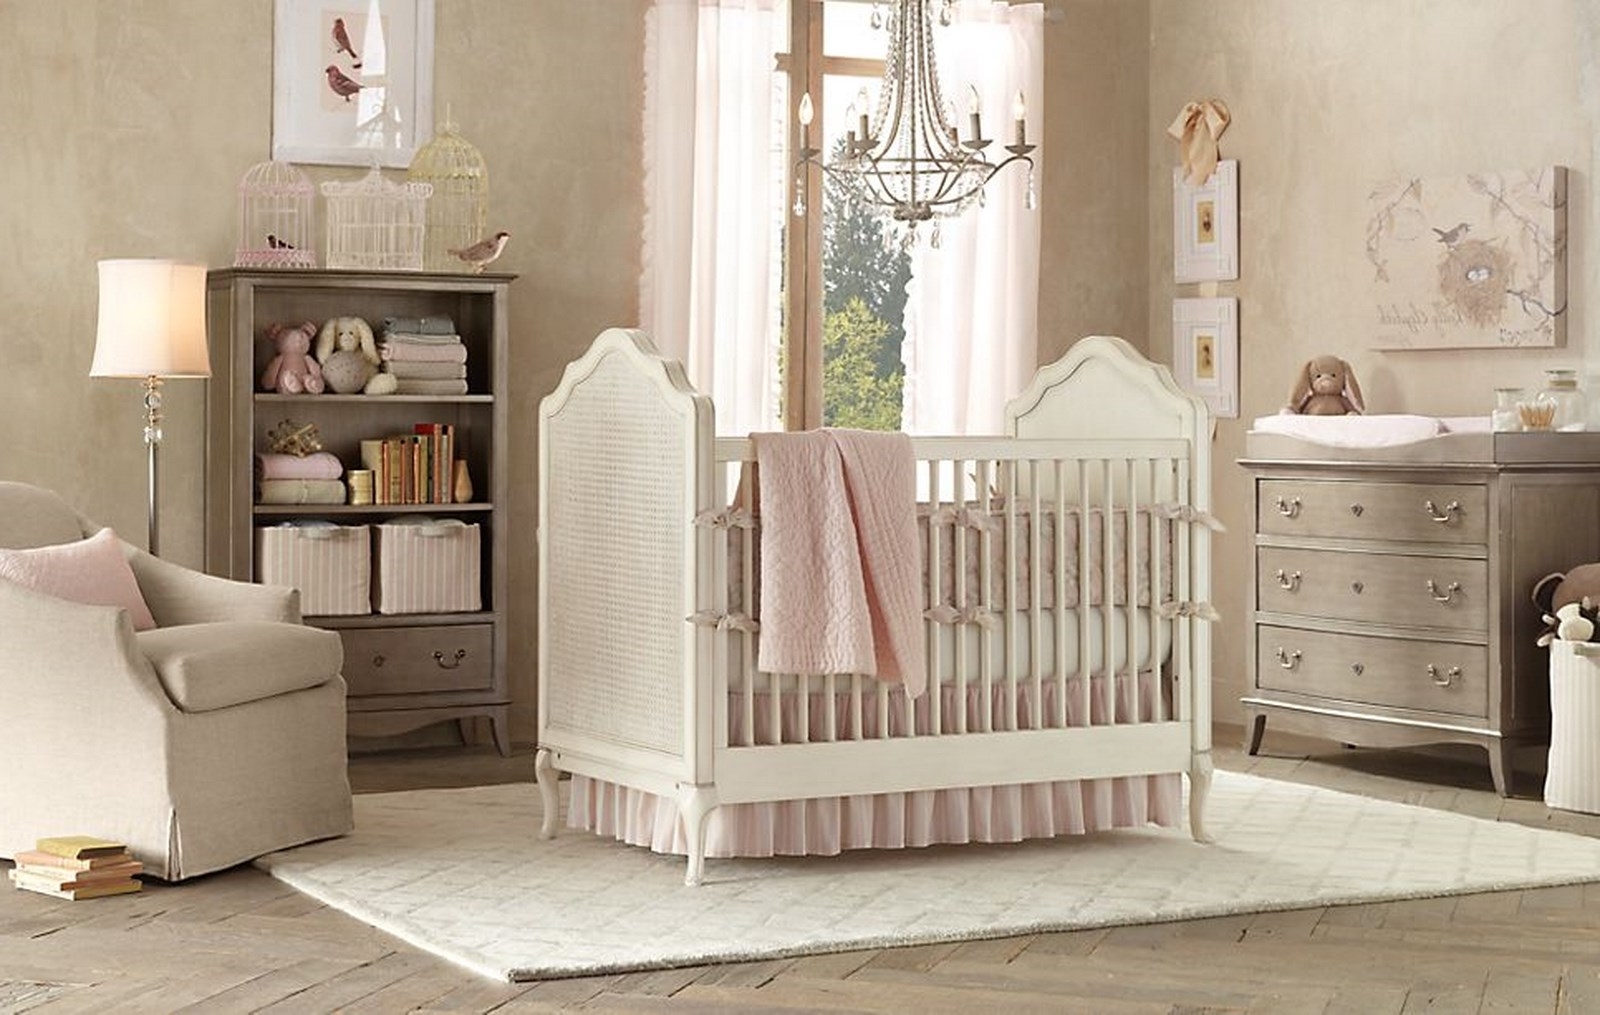 Baby bedroom. Кроватка детская"Theophile & Patachou". Комната для новорожденного. Комната для новорожденной девочки. Интерьер комнаты для новорожденного.